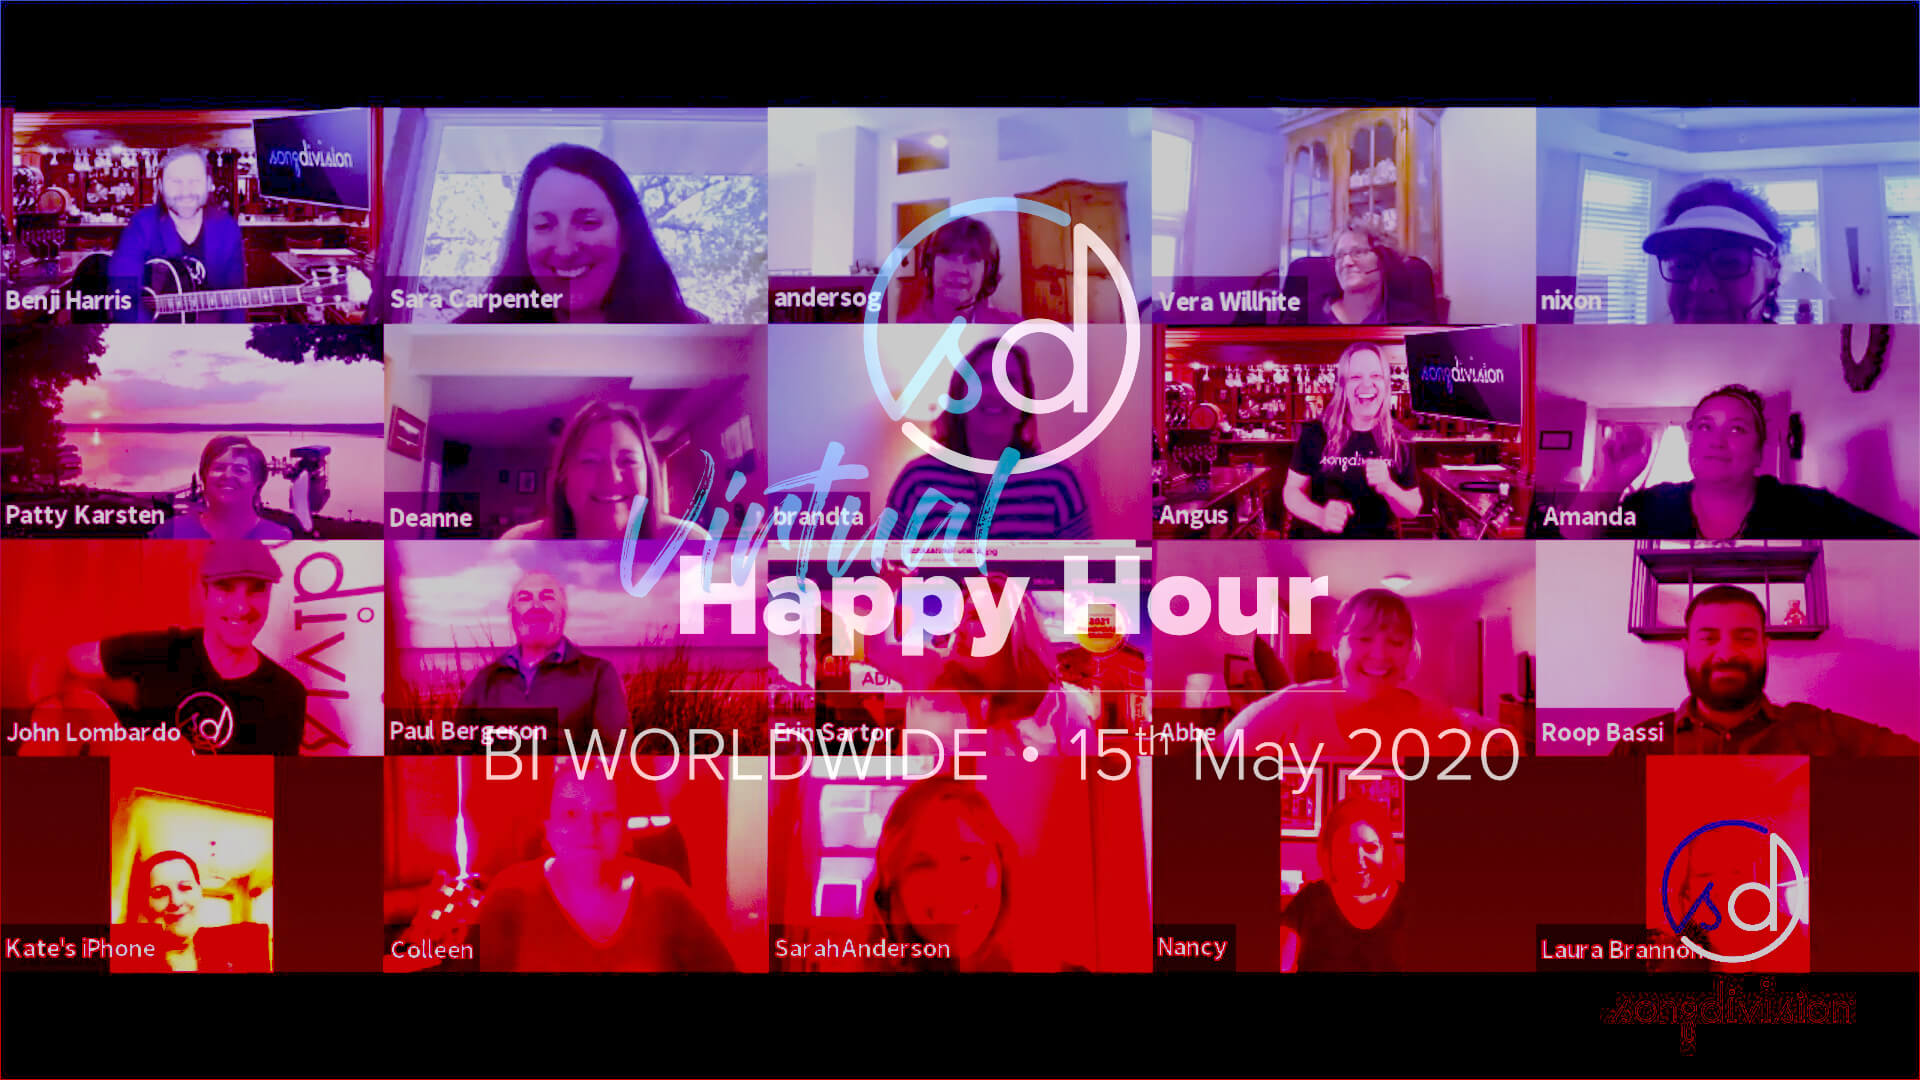 BI WORLDWIDE + Virtual Happy Hour